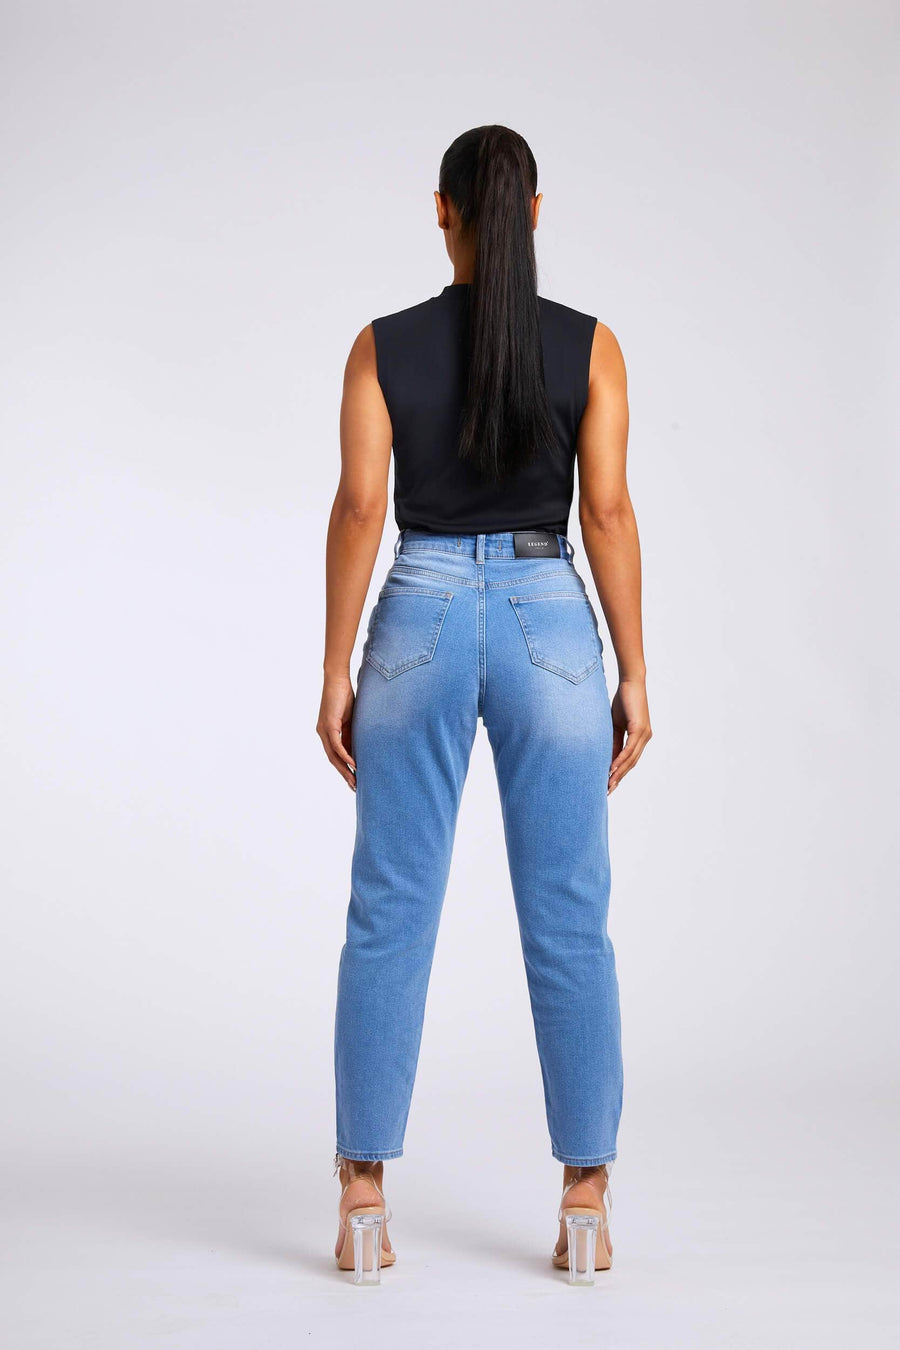 Legend London Jeans MOM JEANS - VINTAGE BLUE WASH